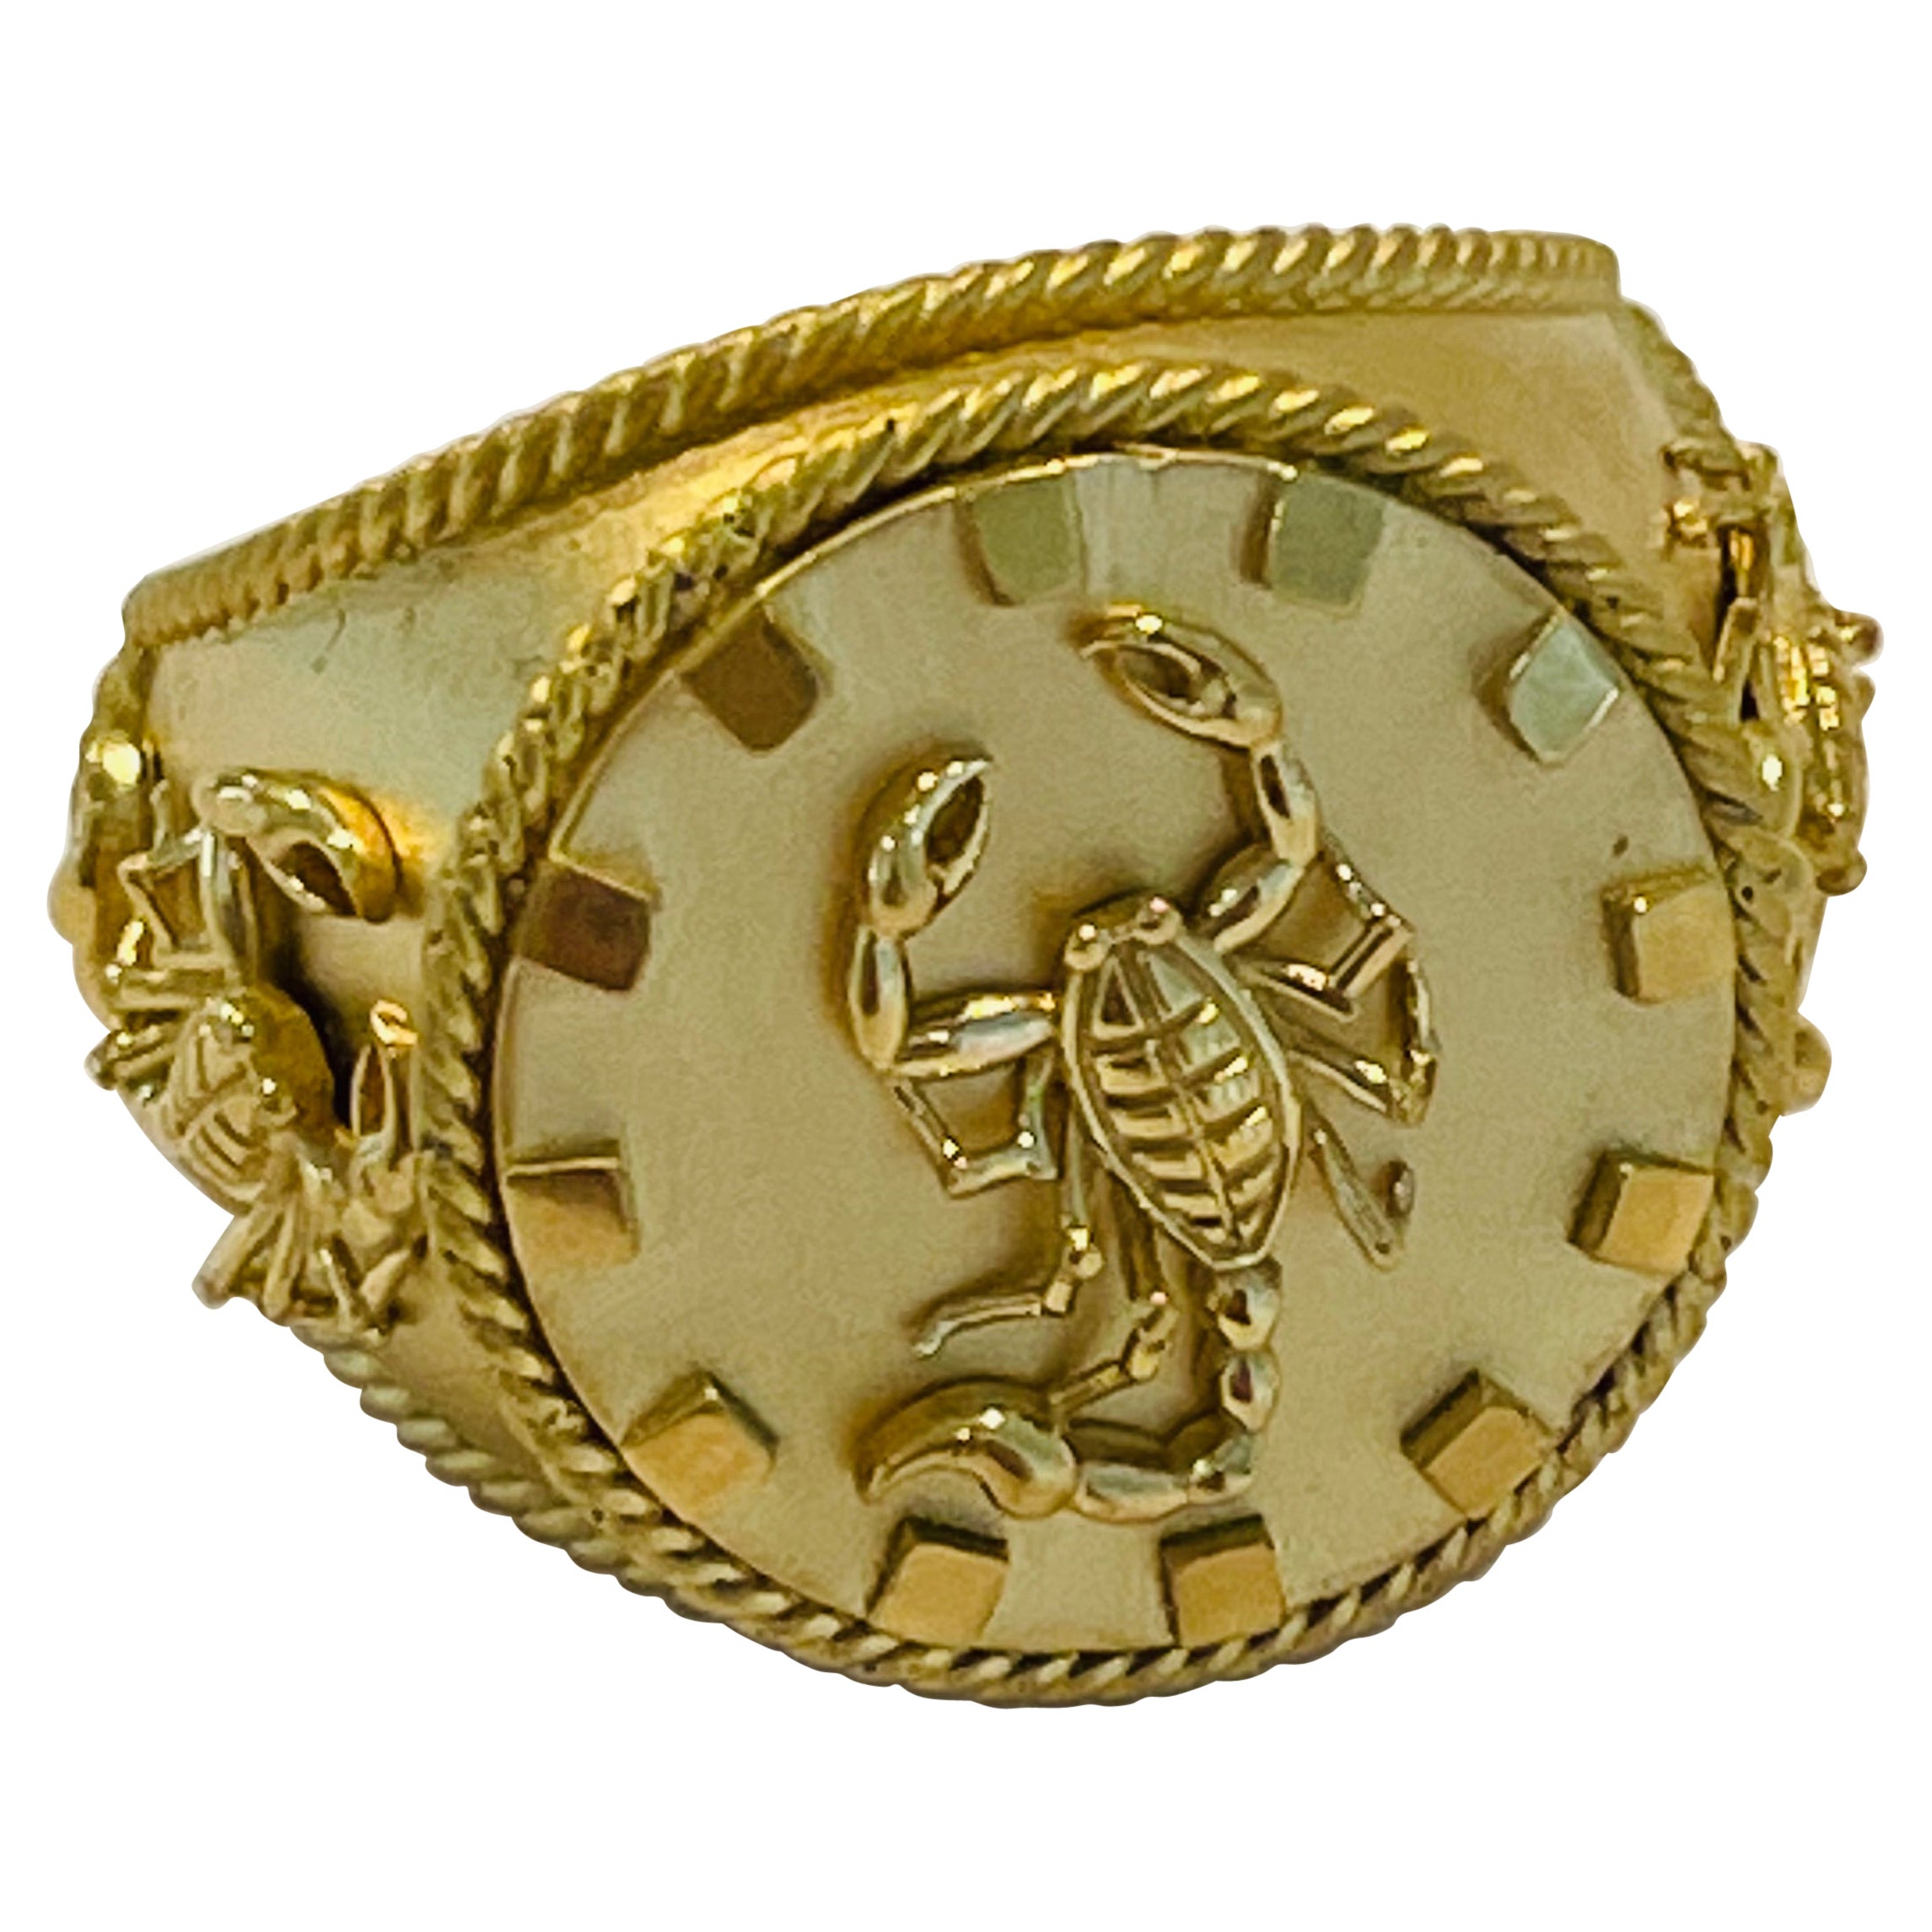 Zodiac Scorpion Ring in 22k Gold by Tagili